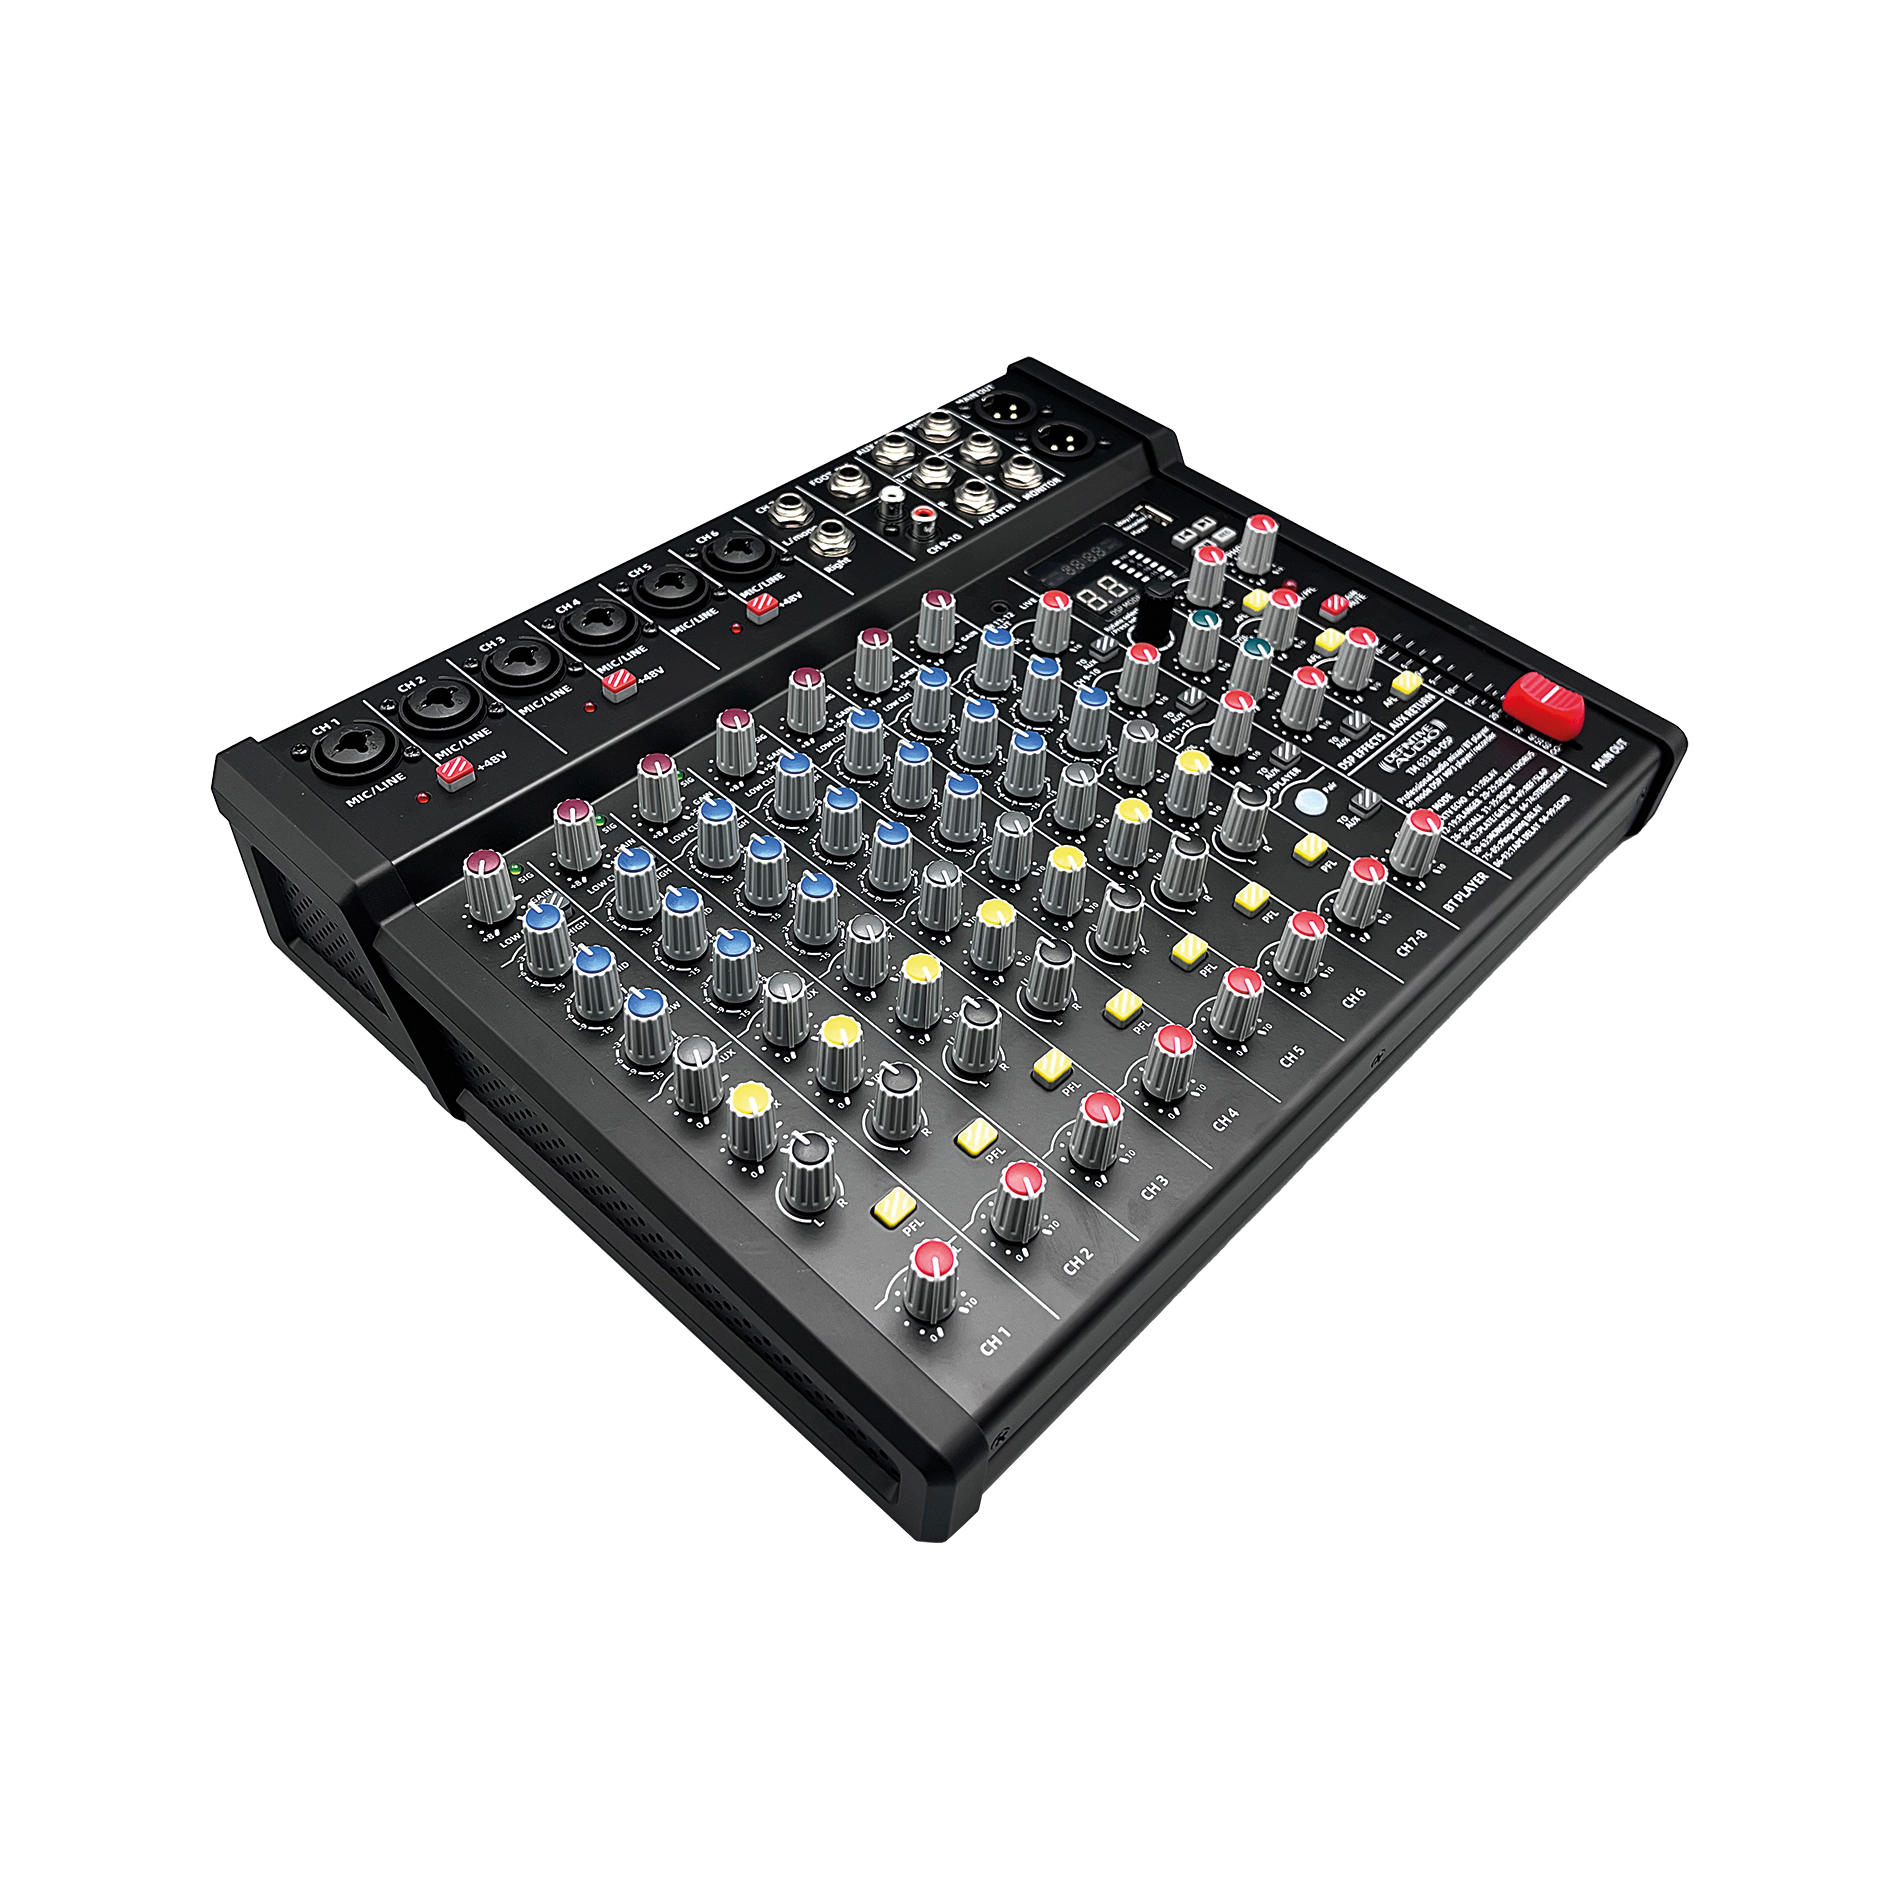 Definitive Audio Tm 633 Bu-dsp - Mesa de mezcla analógica - Variation 2